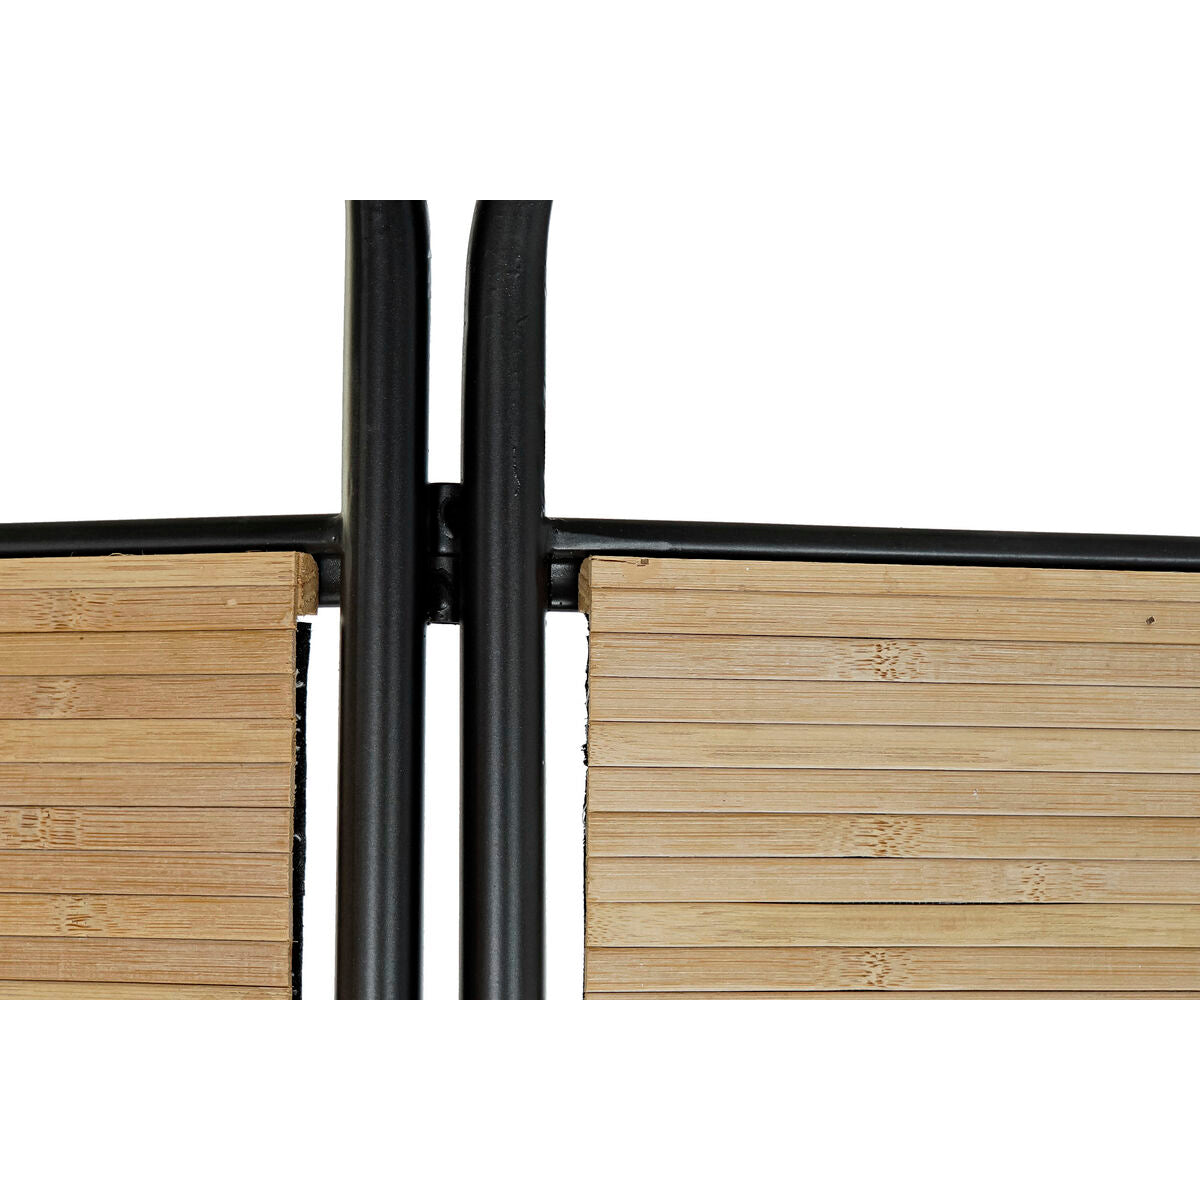 Biombo de bambú de diseño japonés para decoración del hogar (148 x 2 x 180 cm)